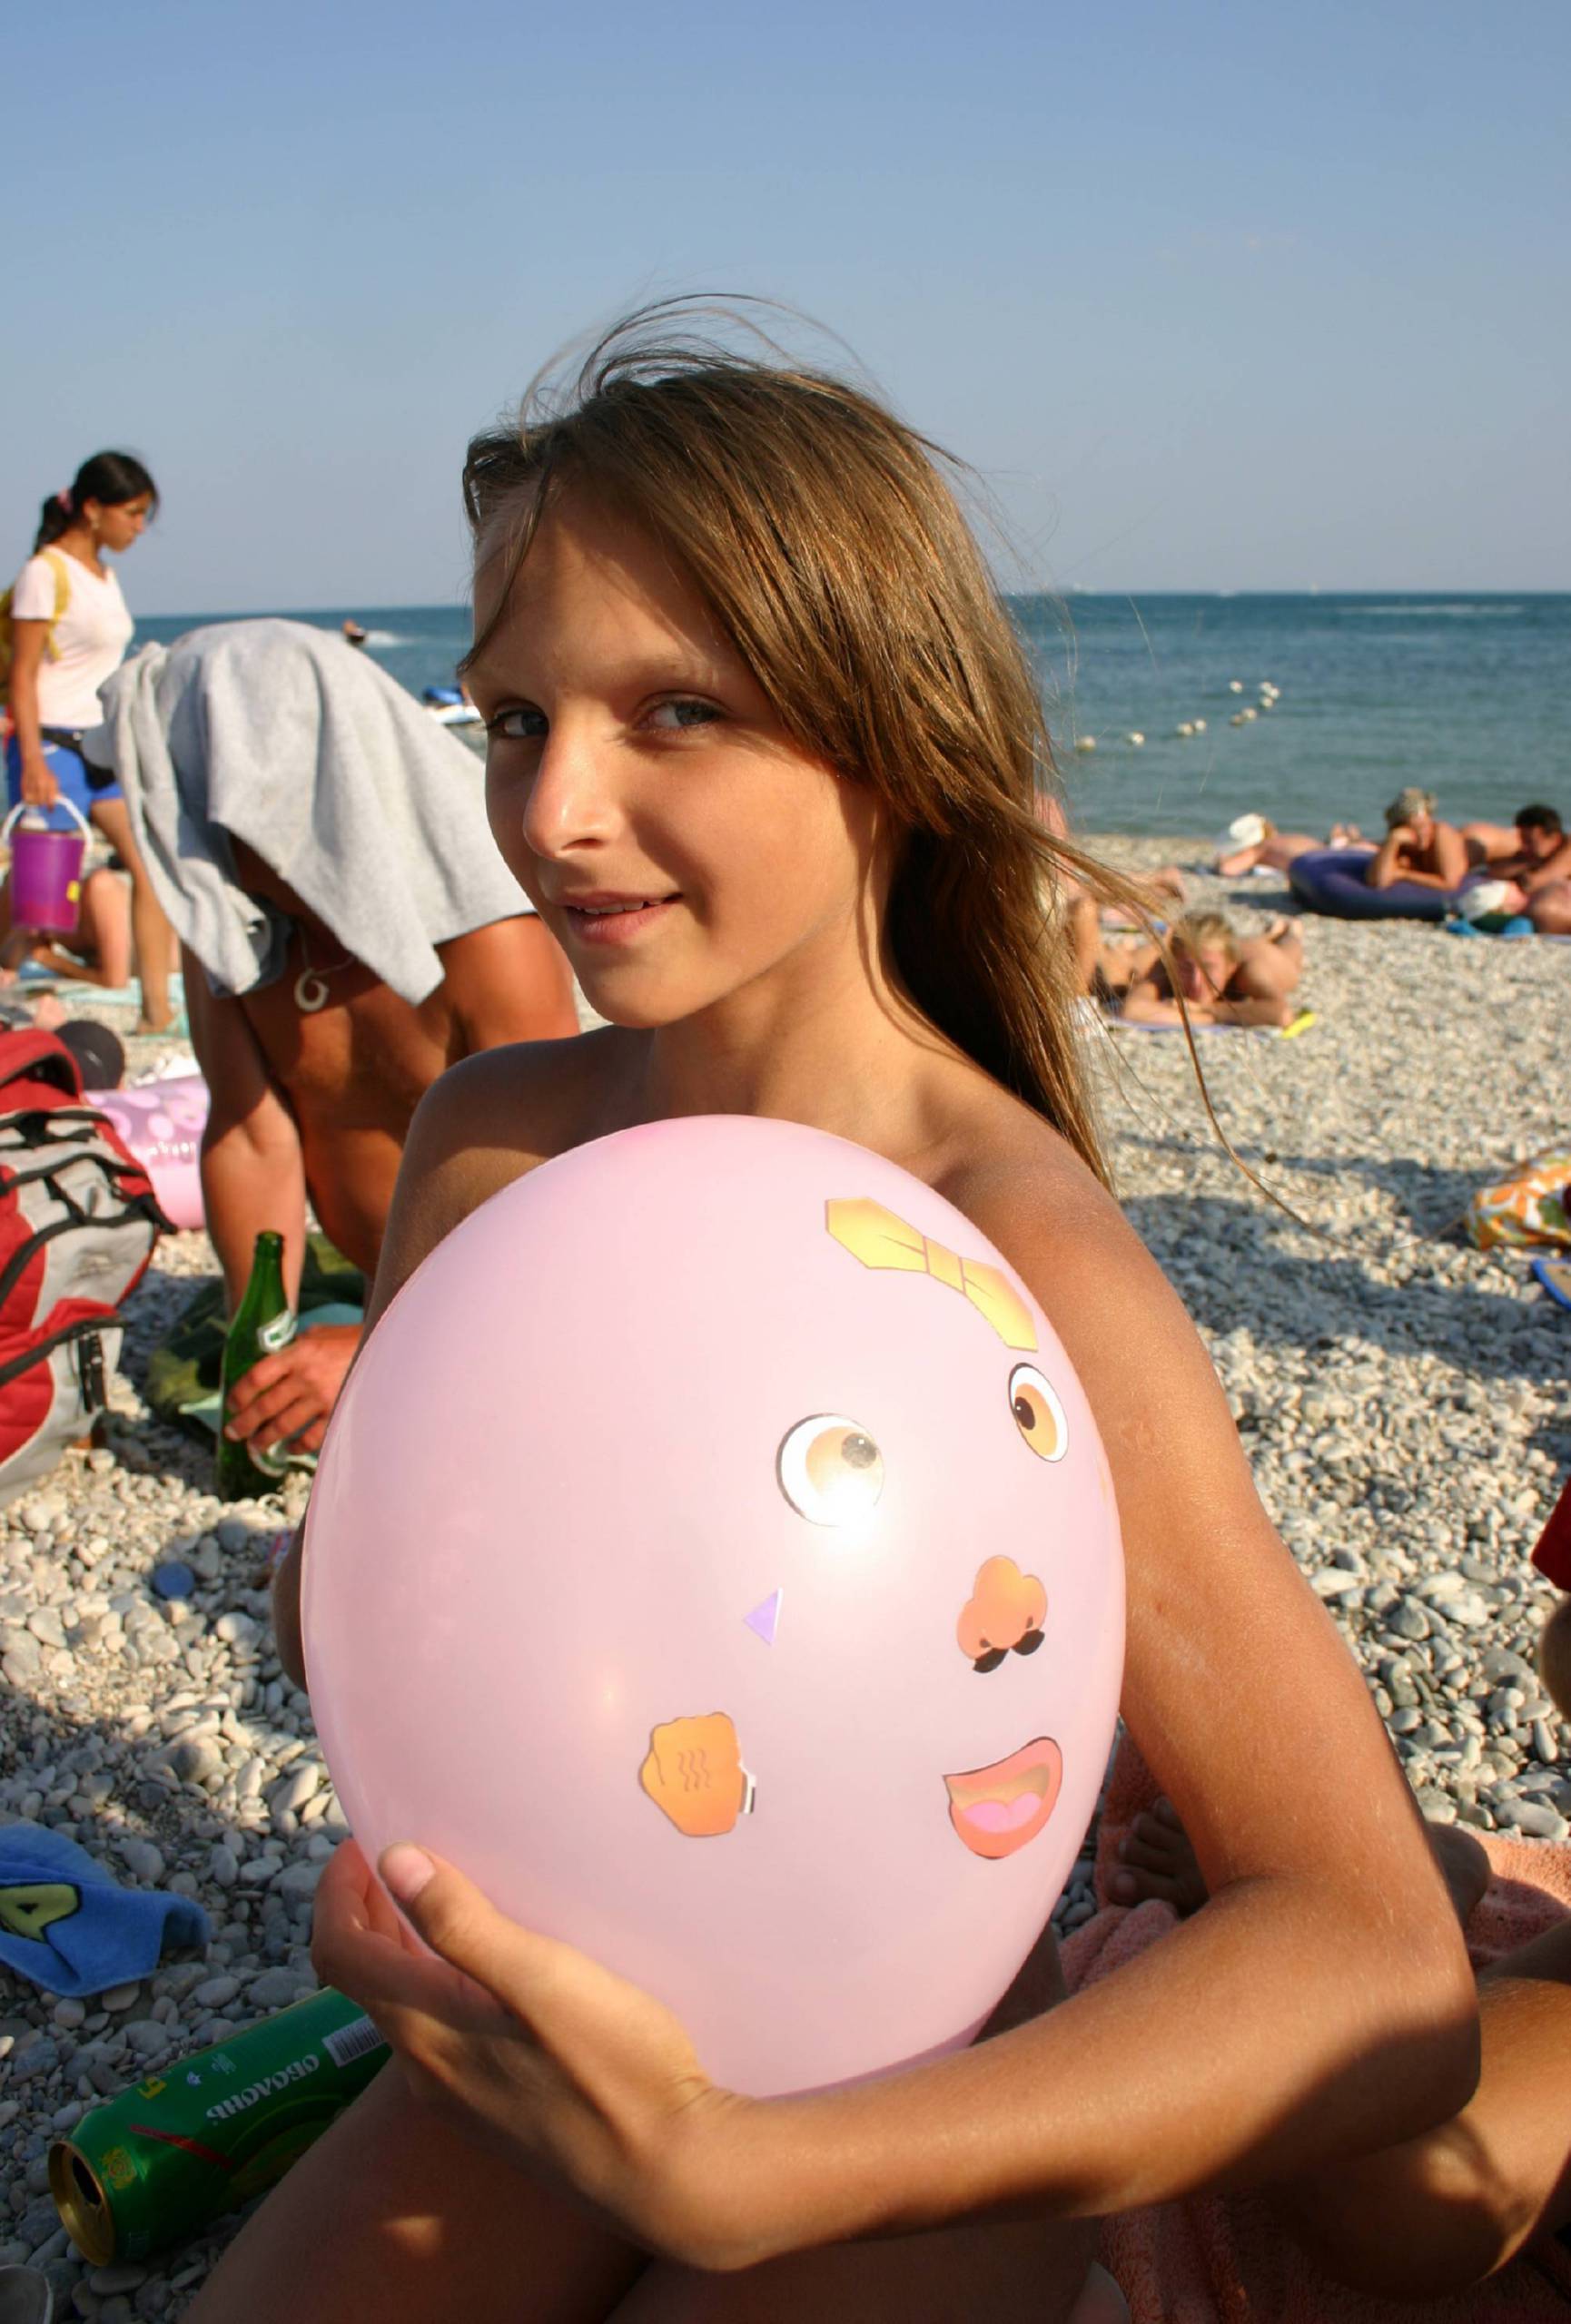 Our Beach Balloon Profile - 1